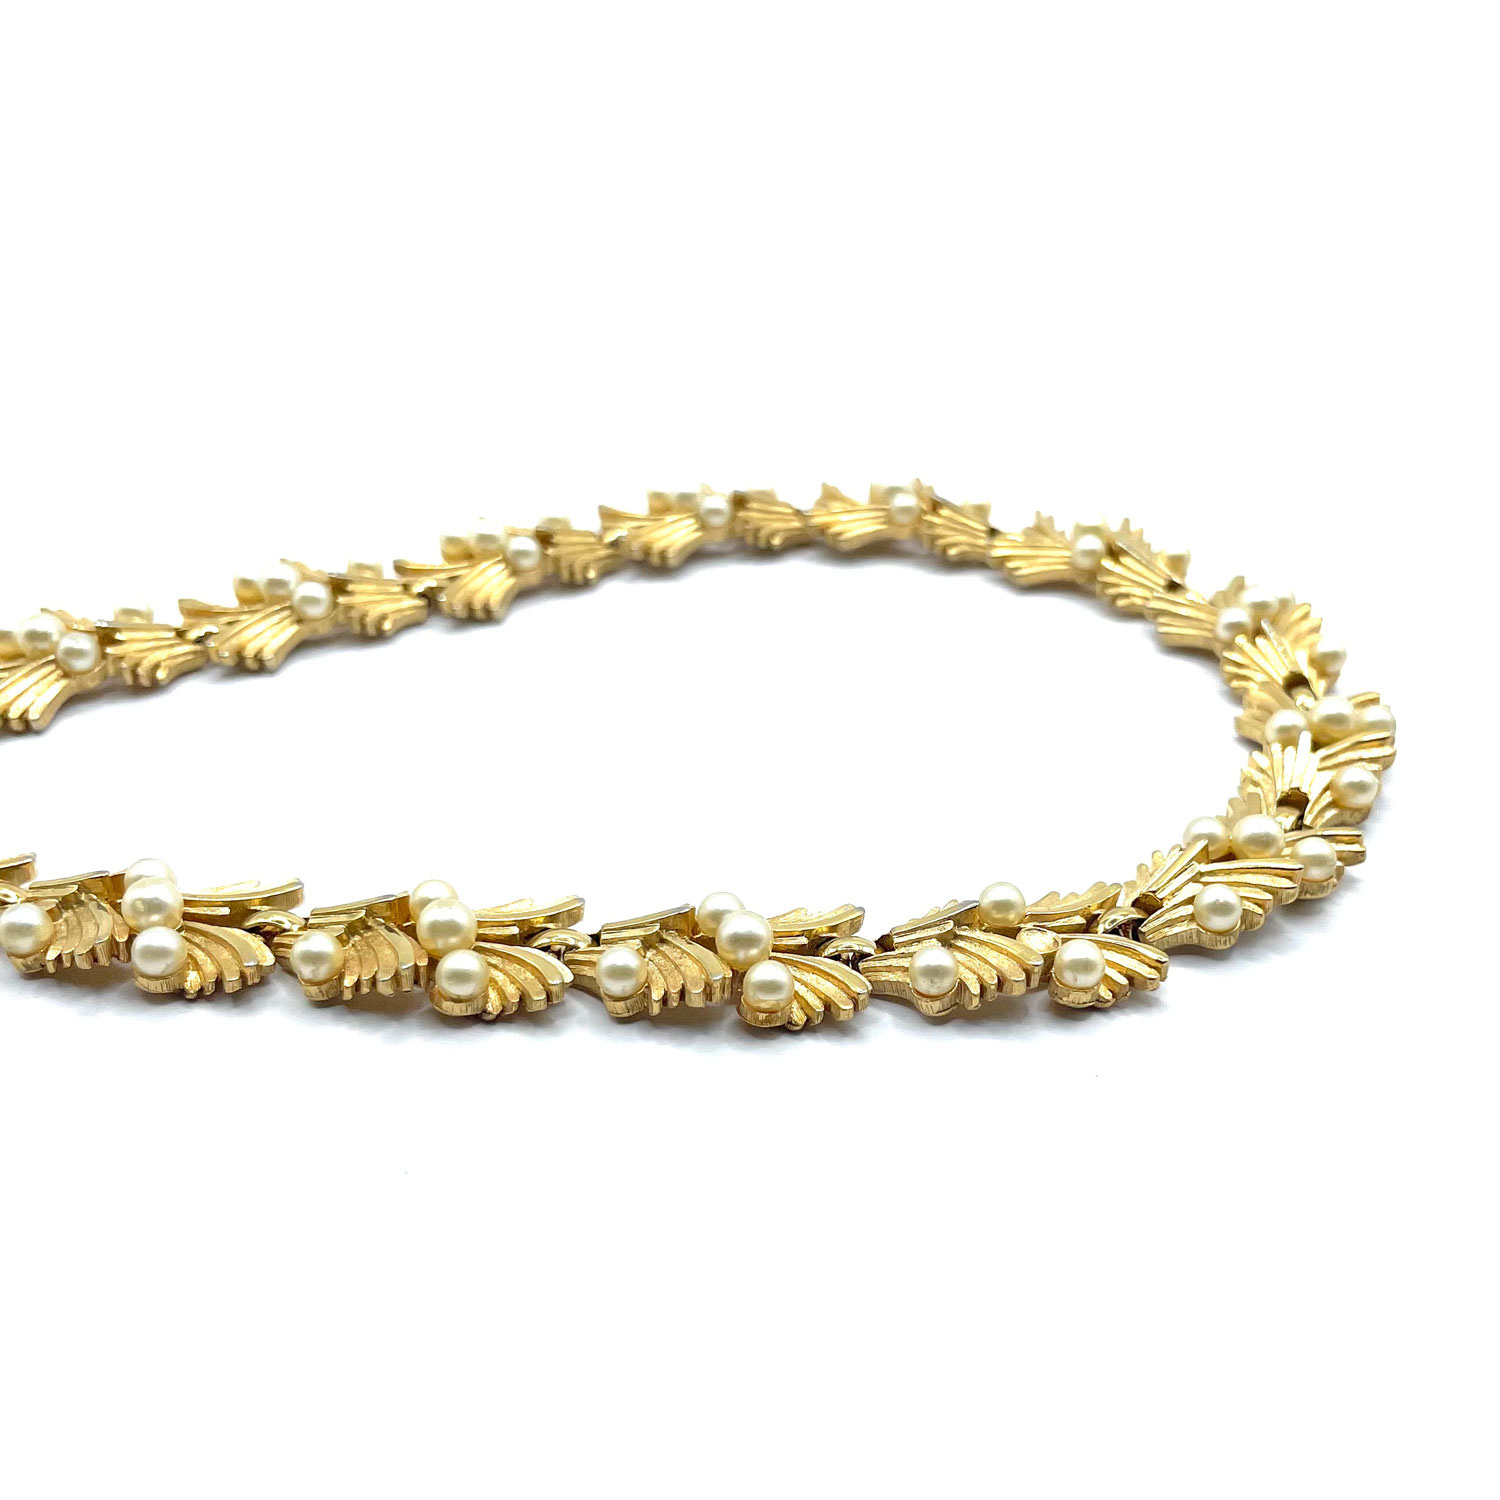 Trifari charm necklace